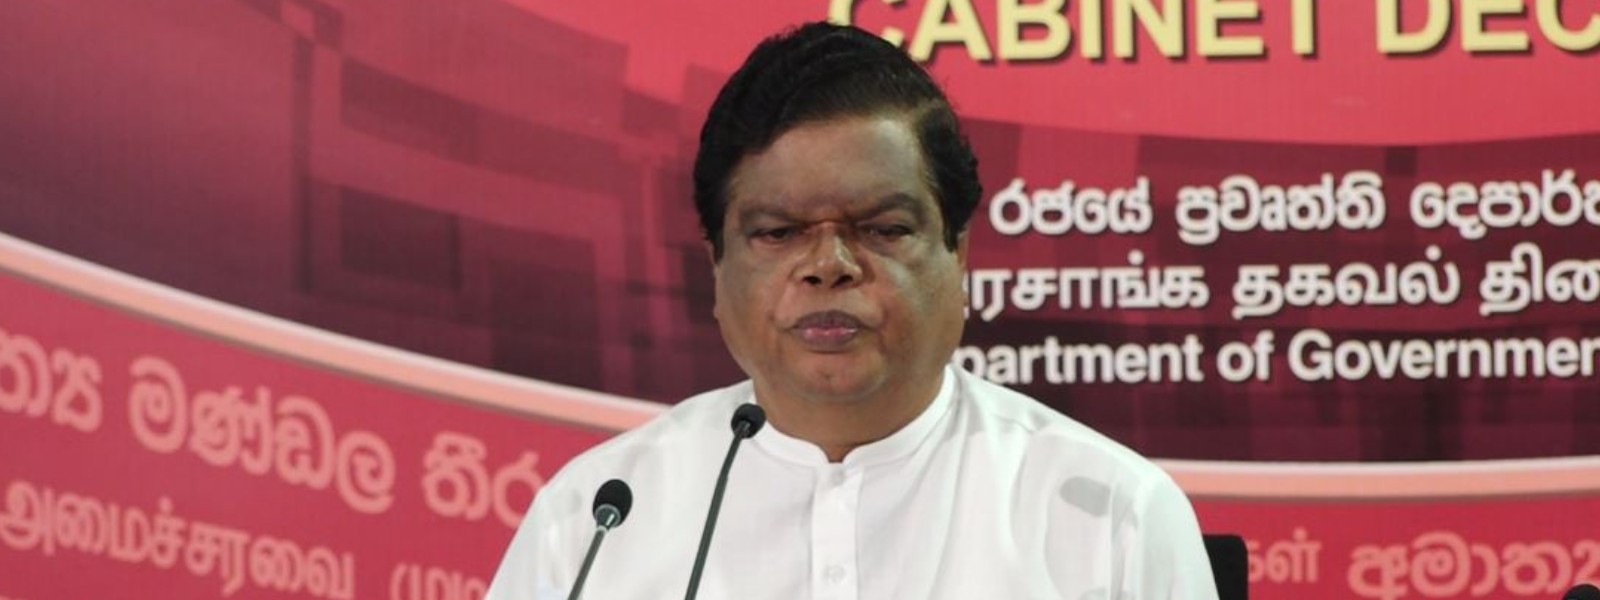 Sri Lanka's Fuel Bill increased by USD 4 Bn